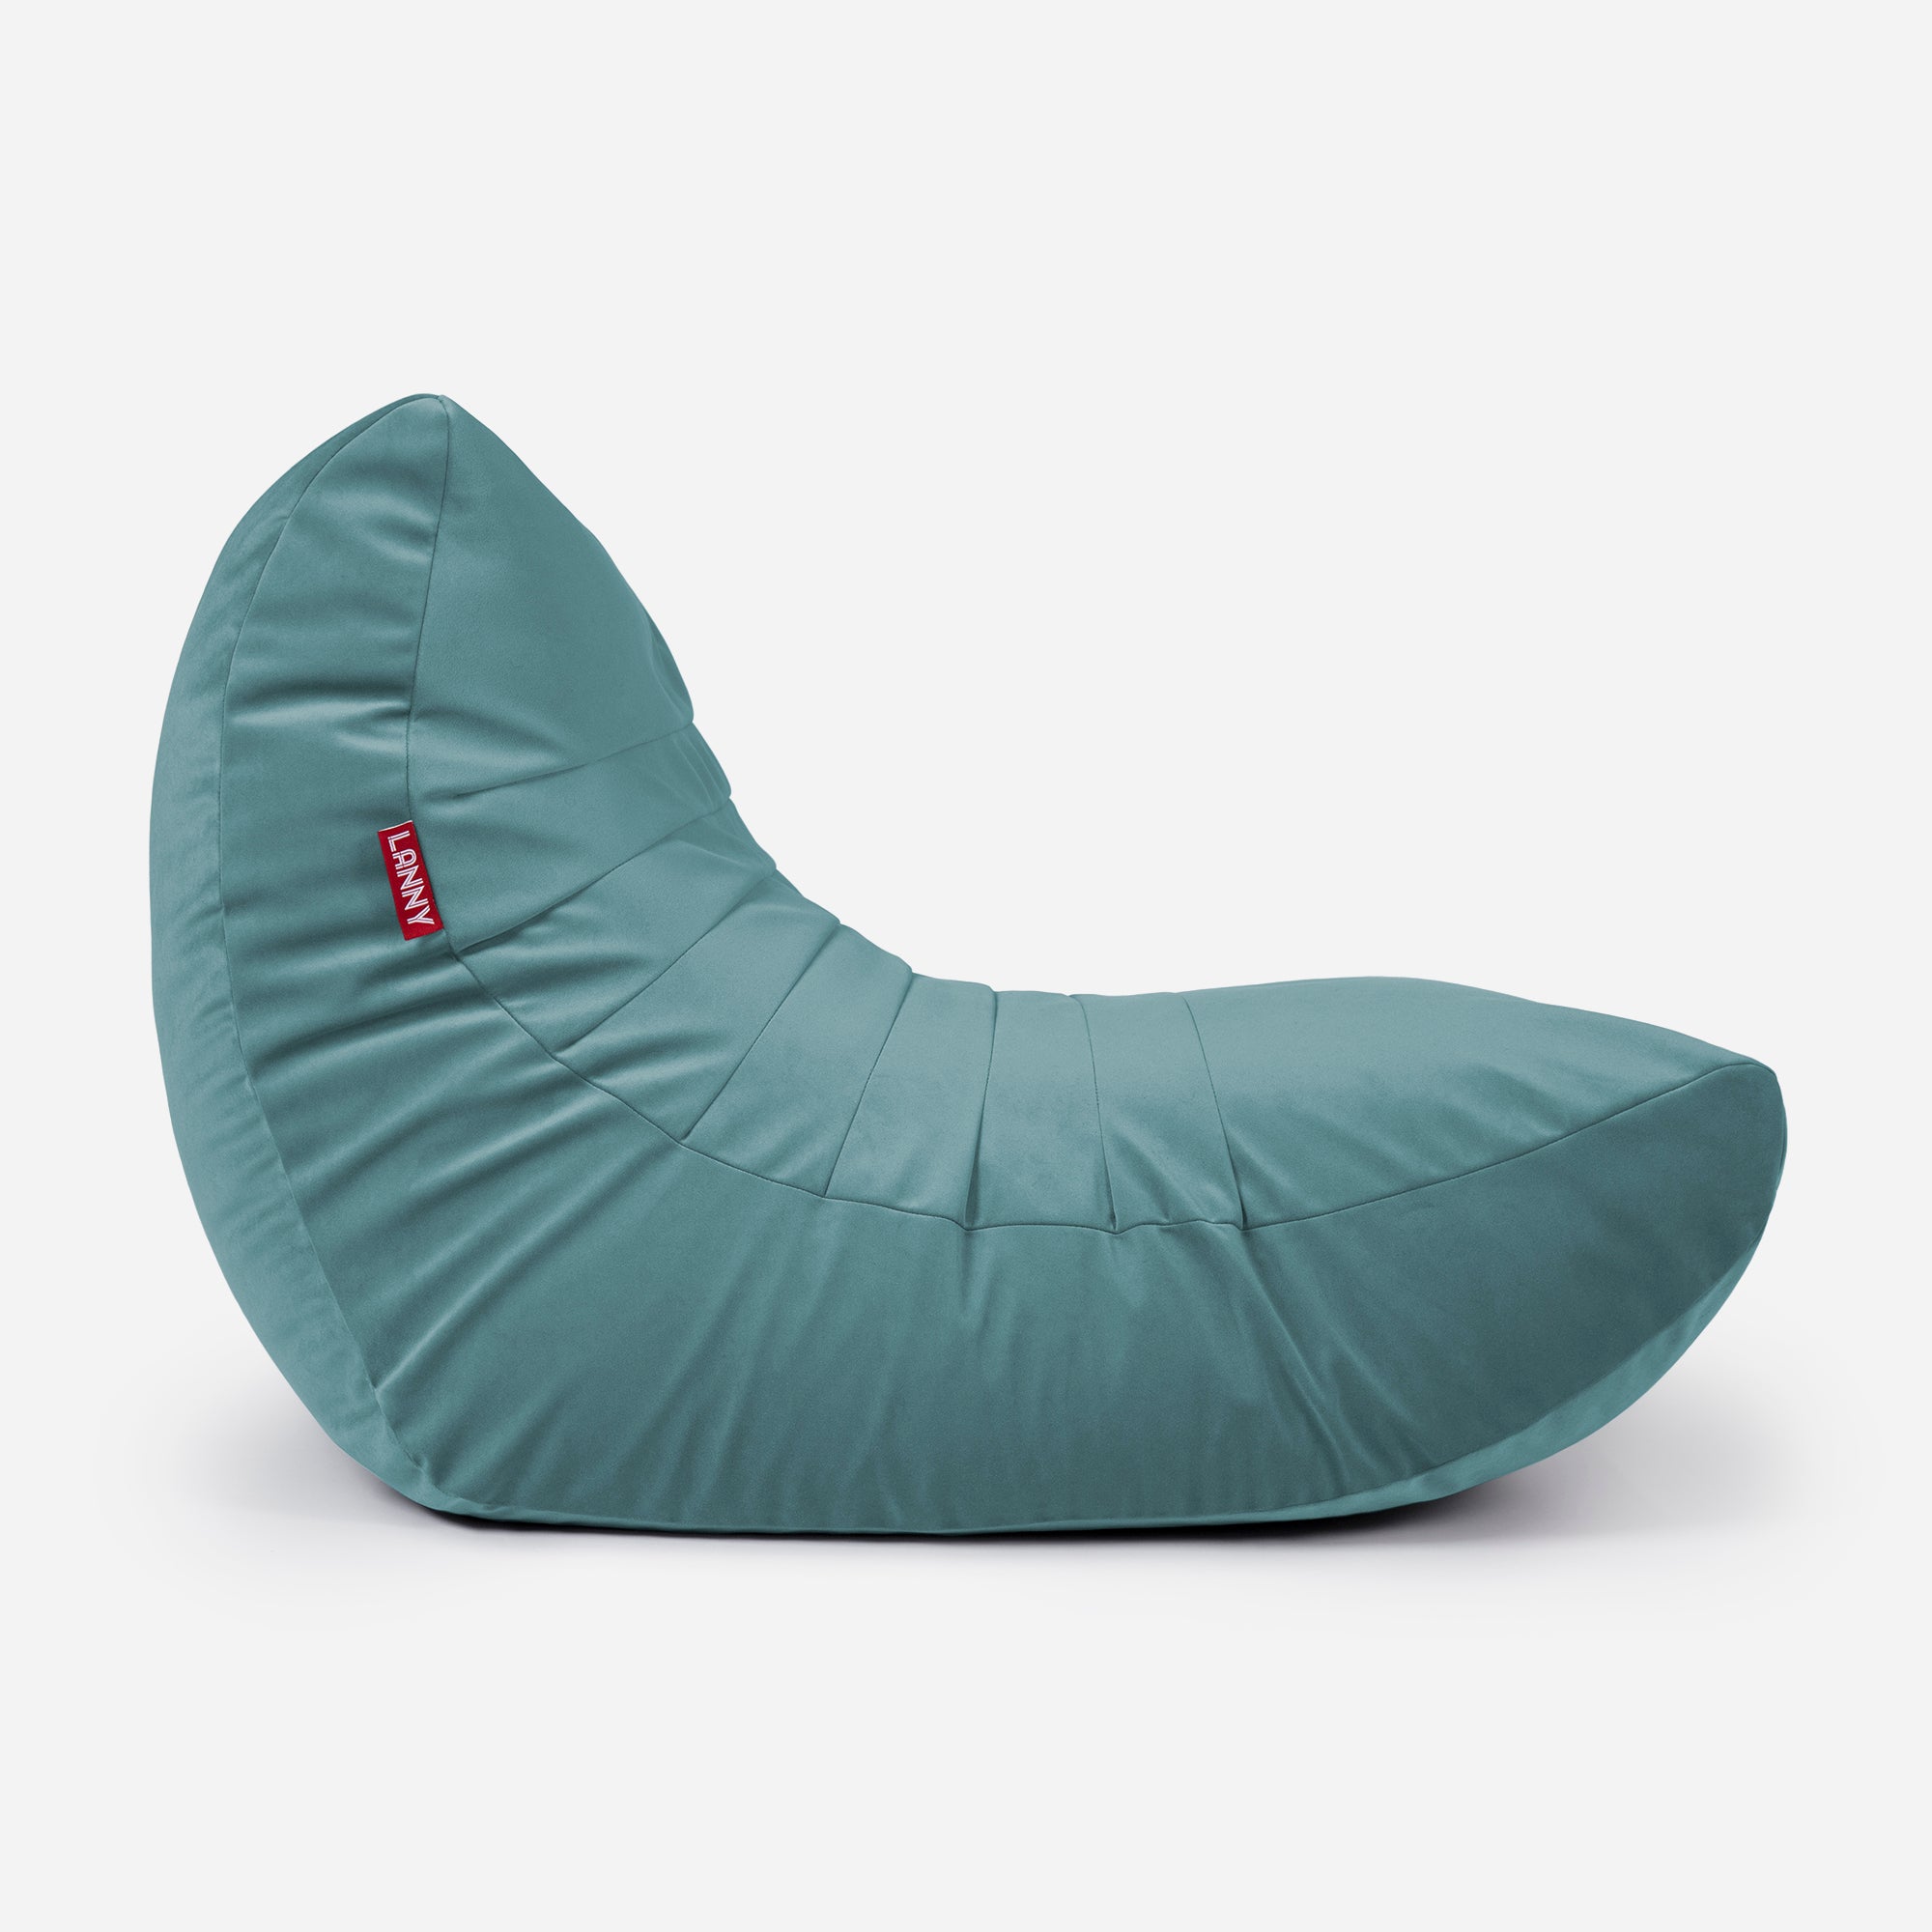 Beanbag Curvy Design Turquoise color 